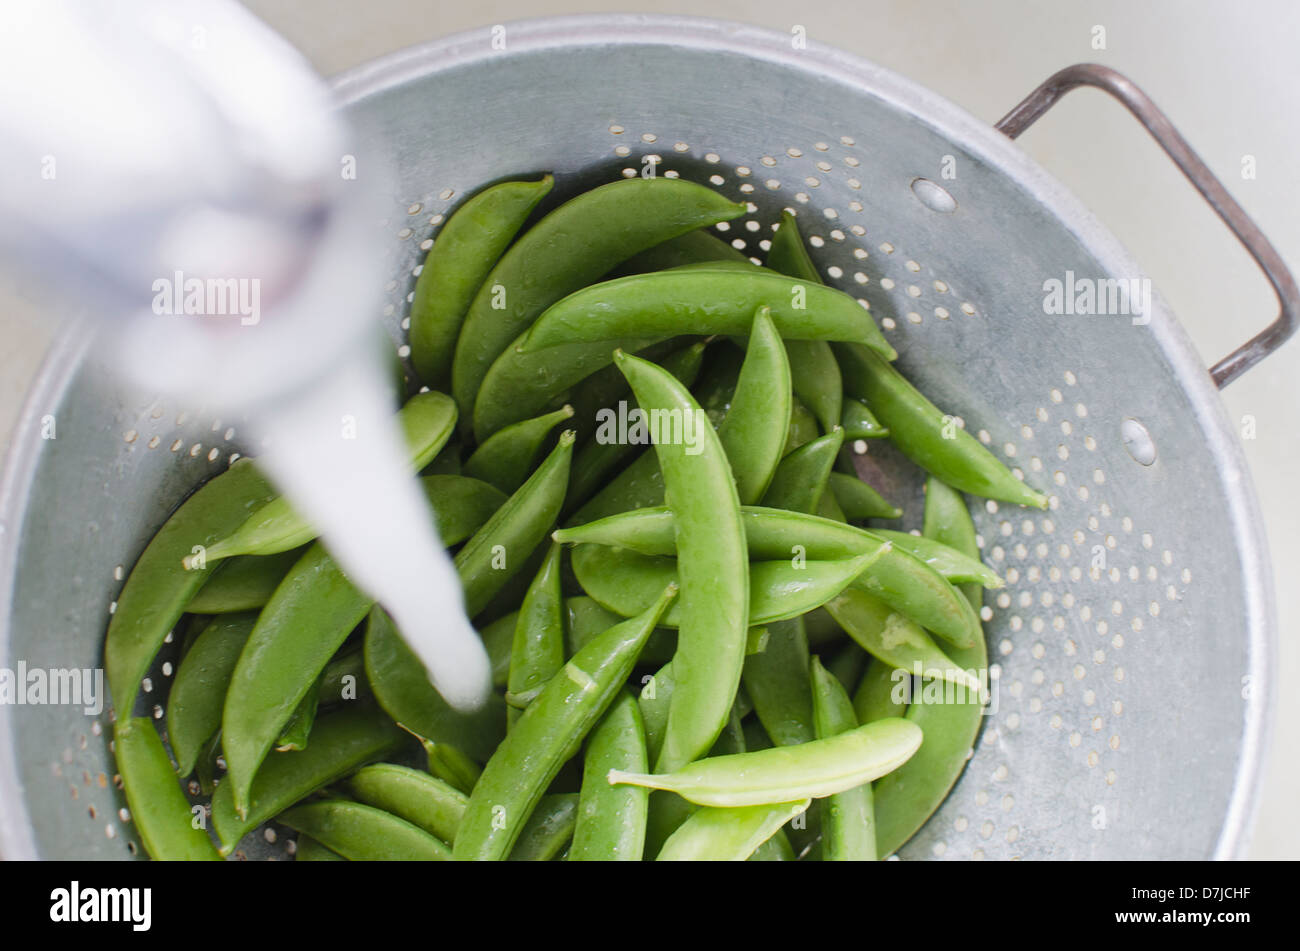 Preparing of green peas Stock Photo